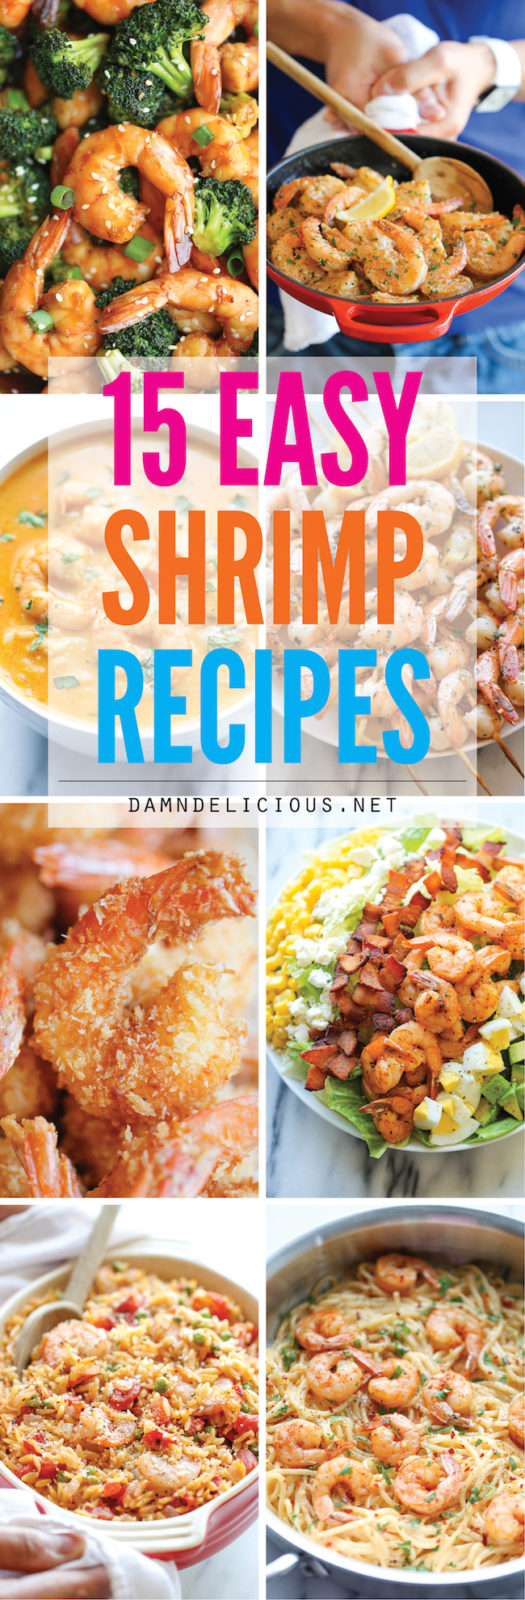 15 Easy Shrimp Recipes Damn Delicious